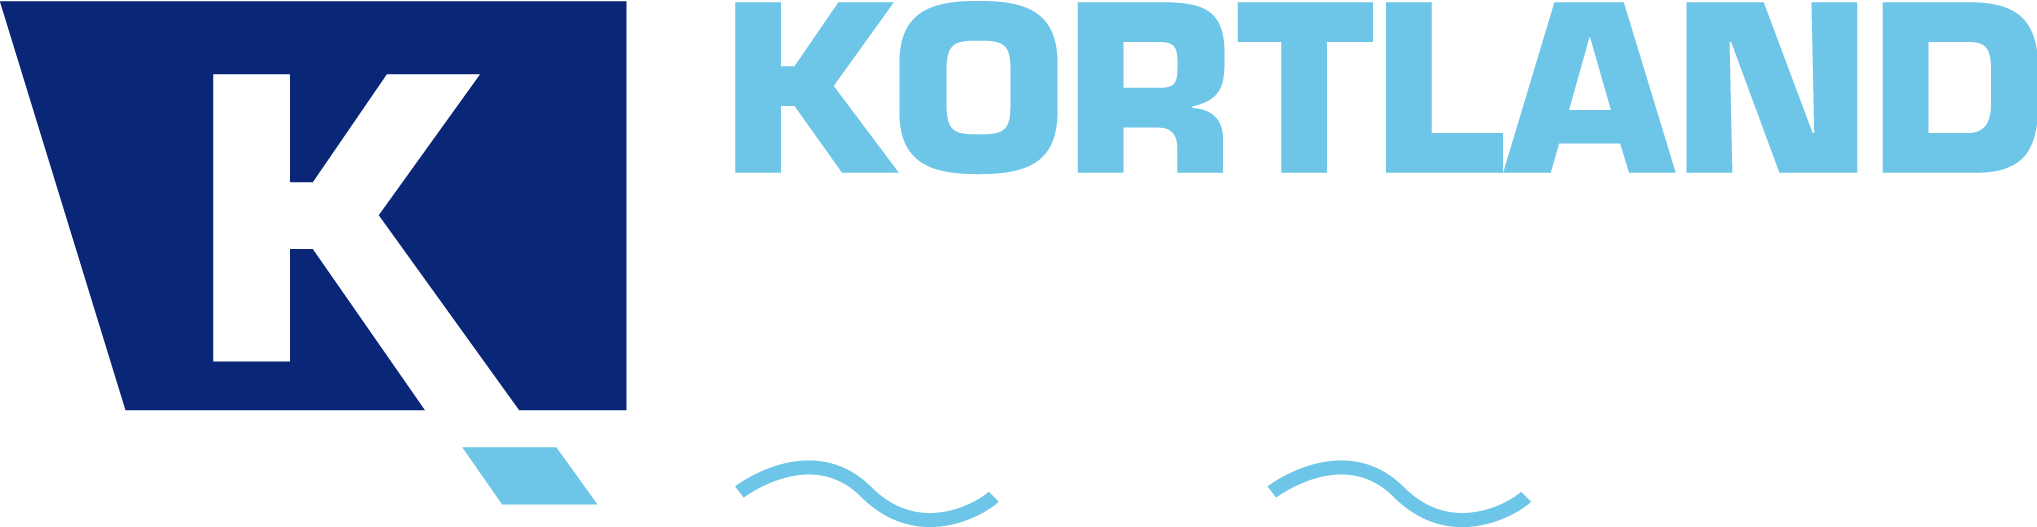 Kortland Maritime Measurements